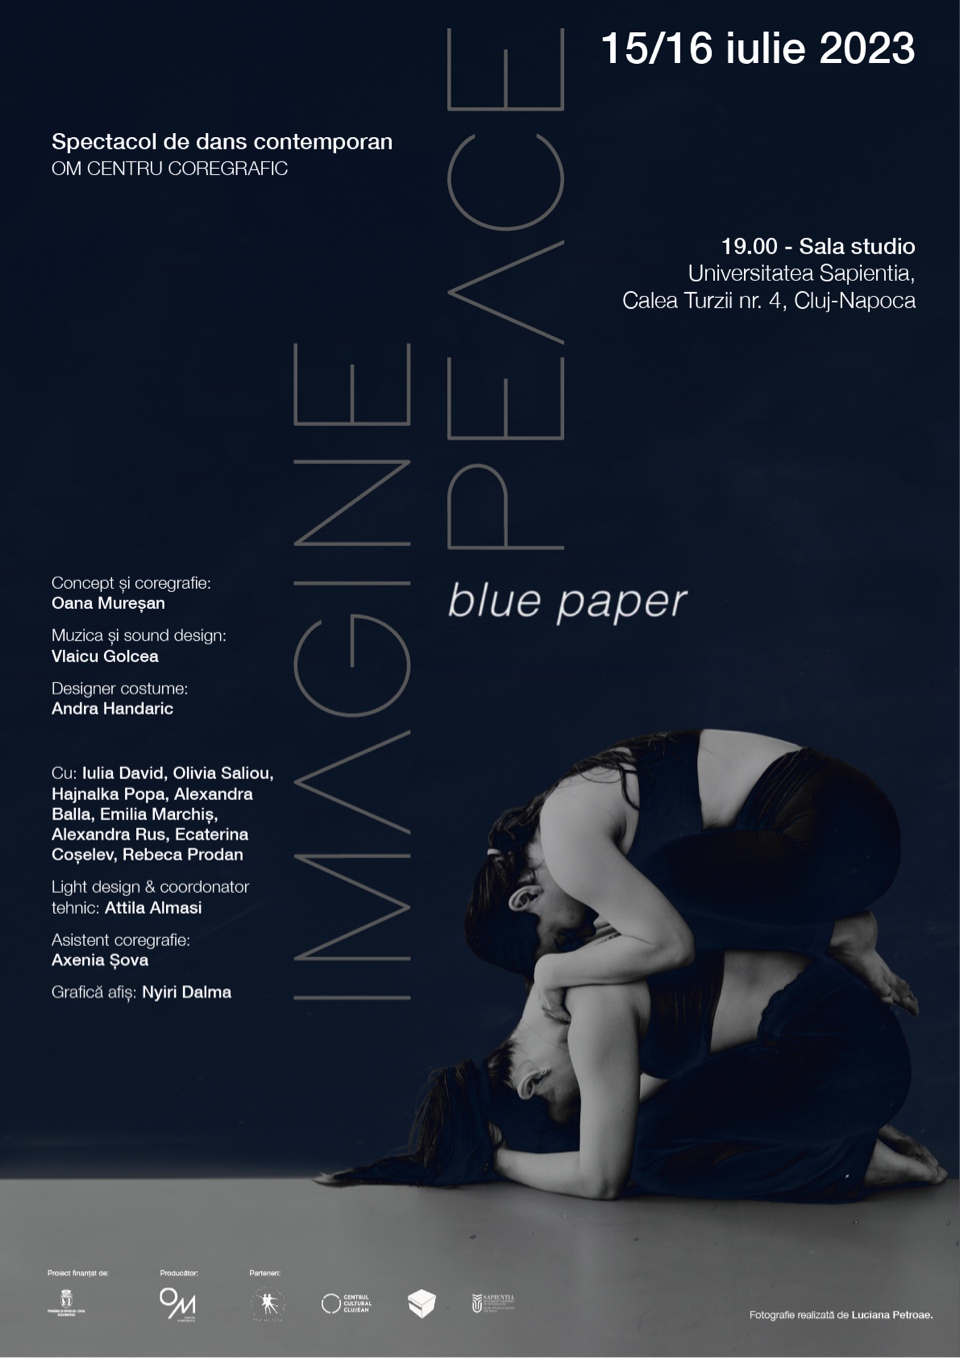 Imagine Peace-blue paper